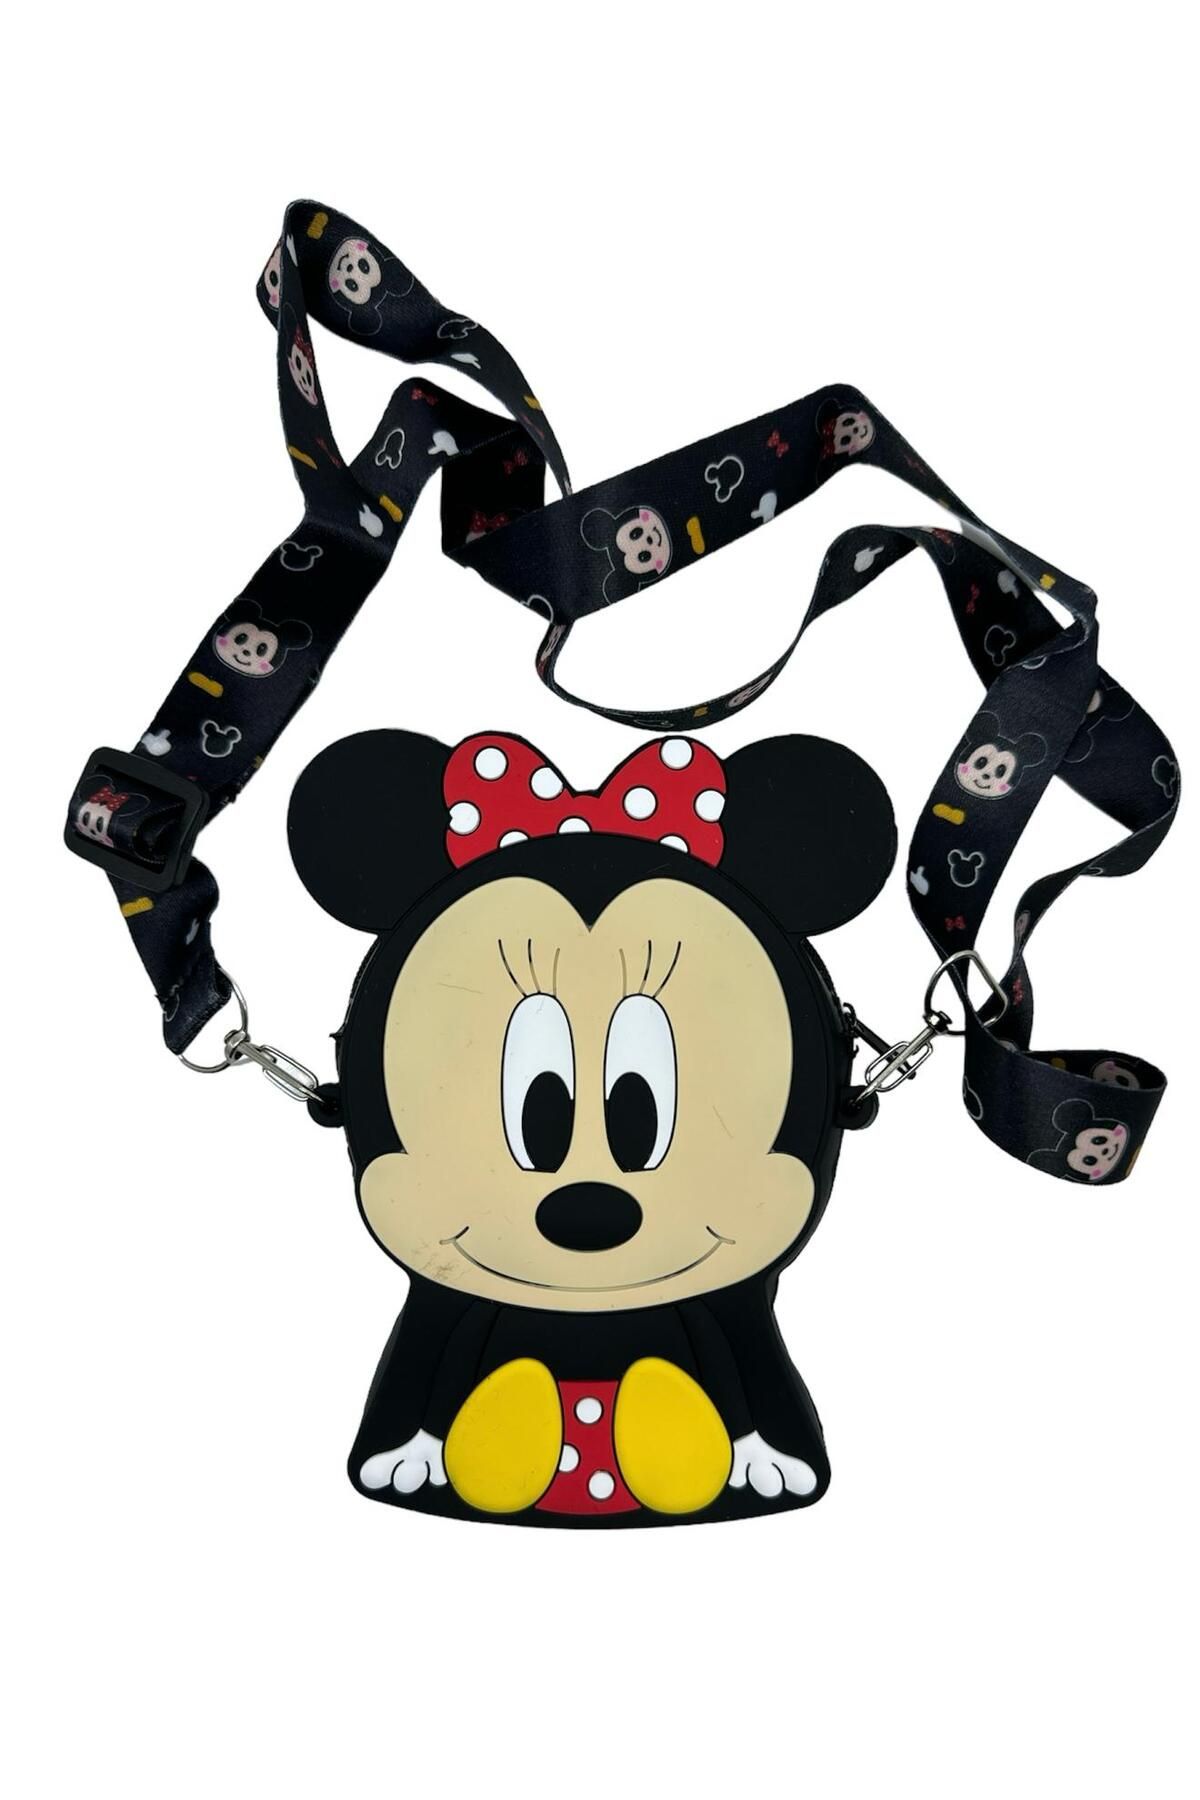 MEM STORE Minnie Mouse Çocuk Silikon Çanta Cüzdan